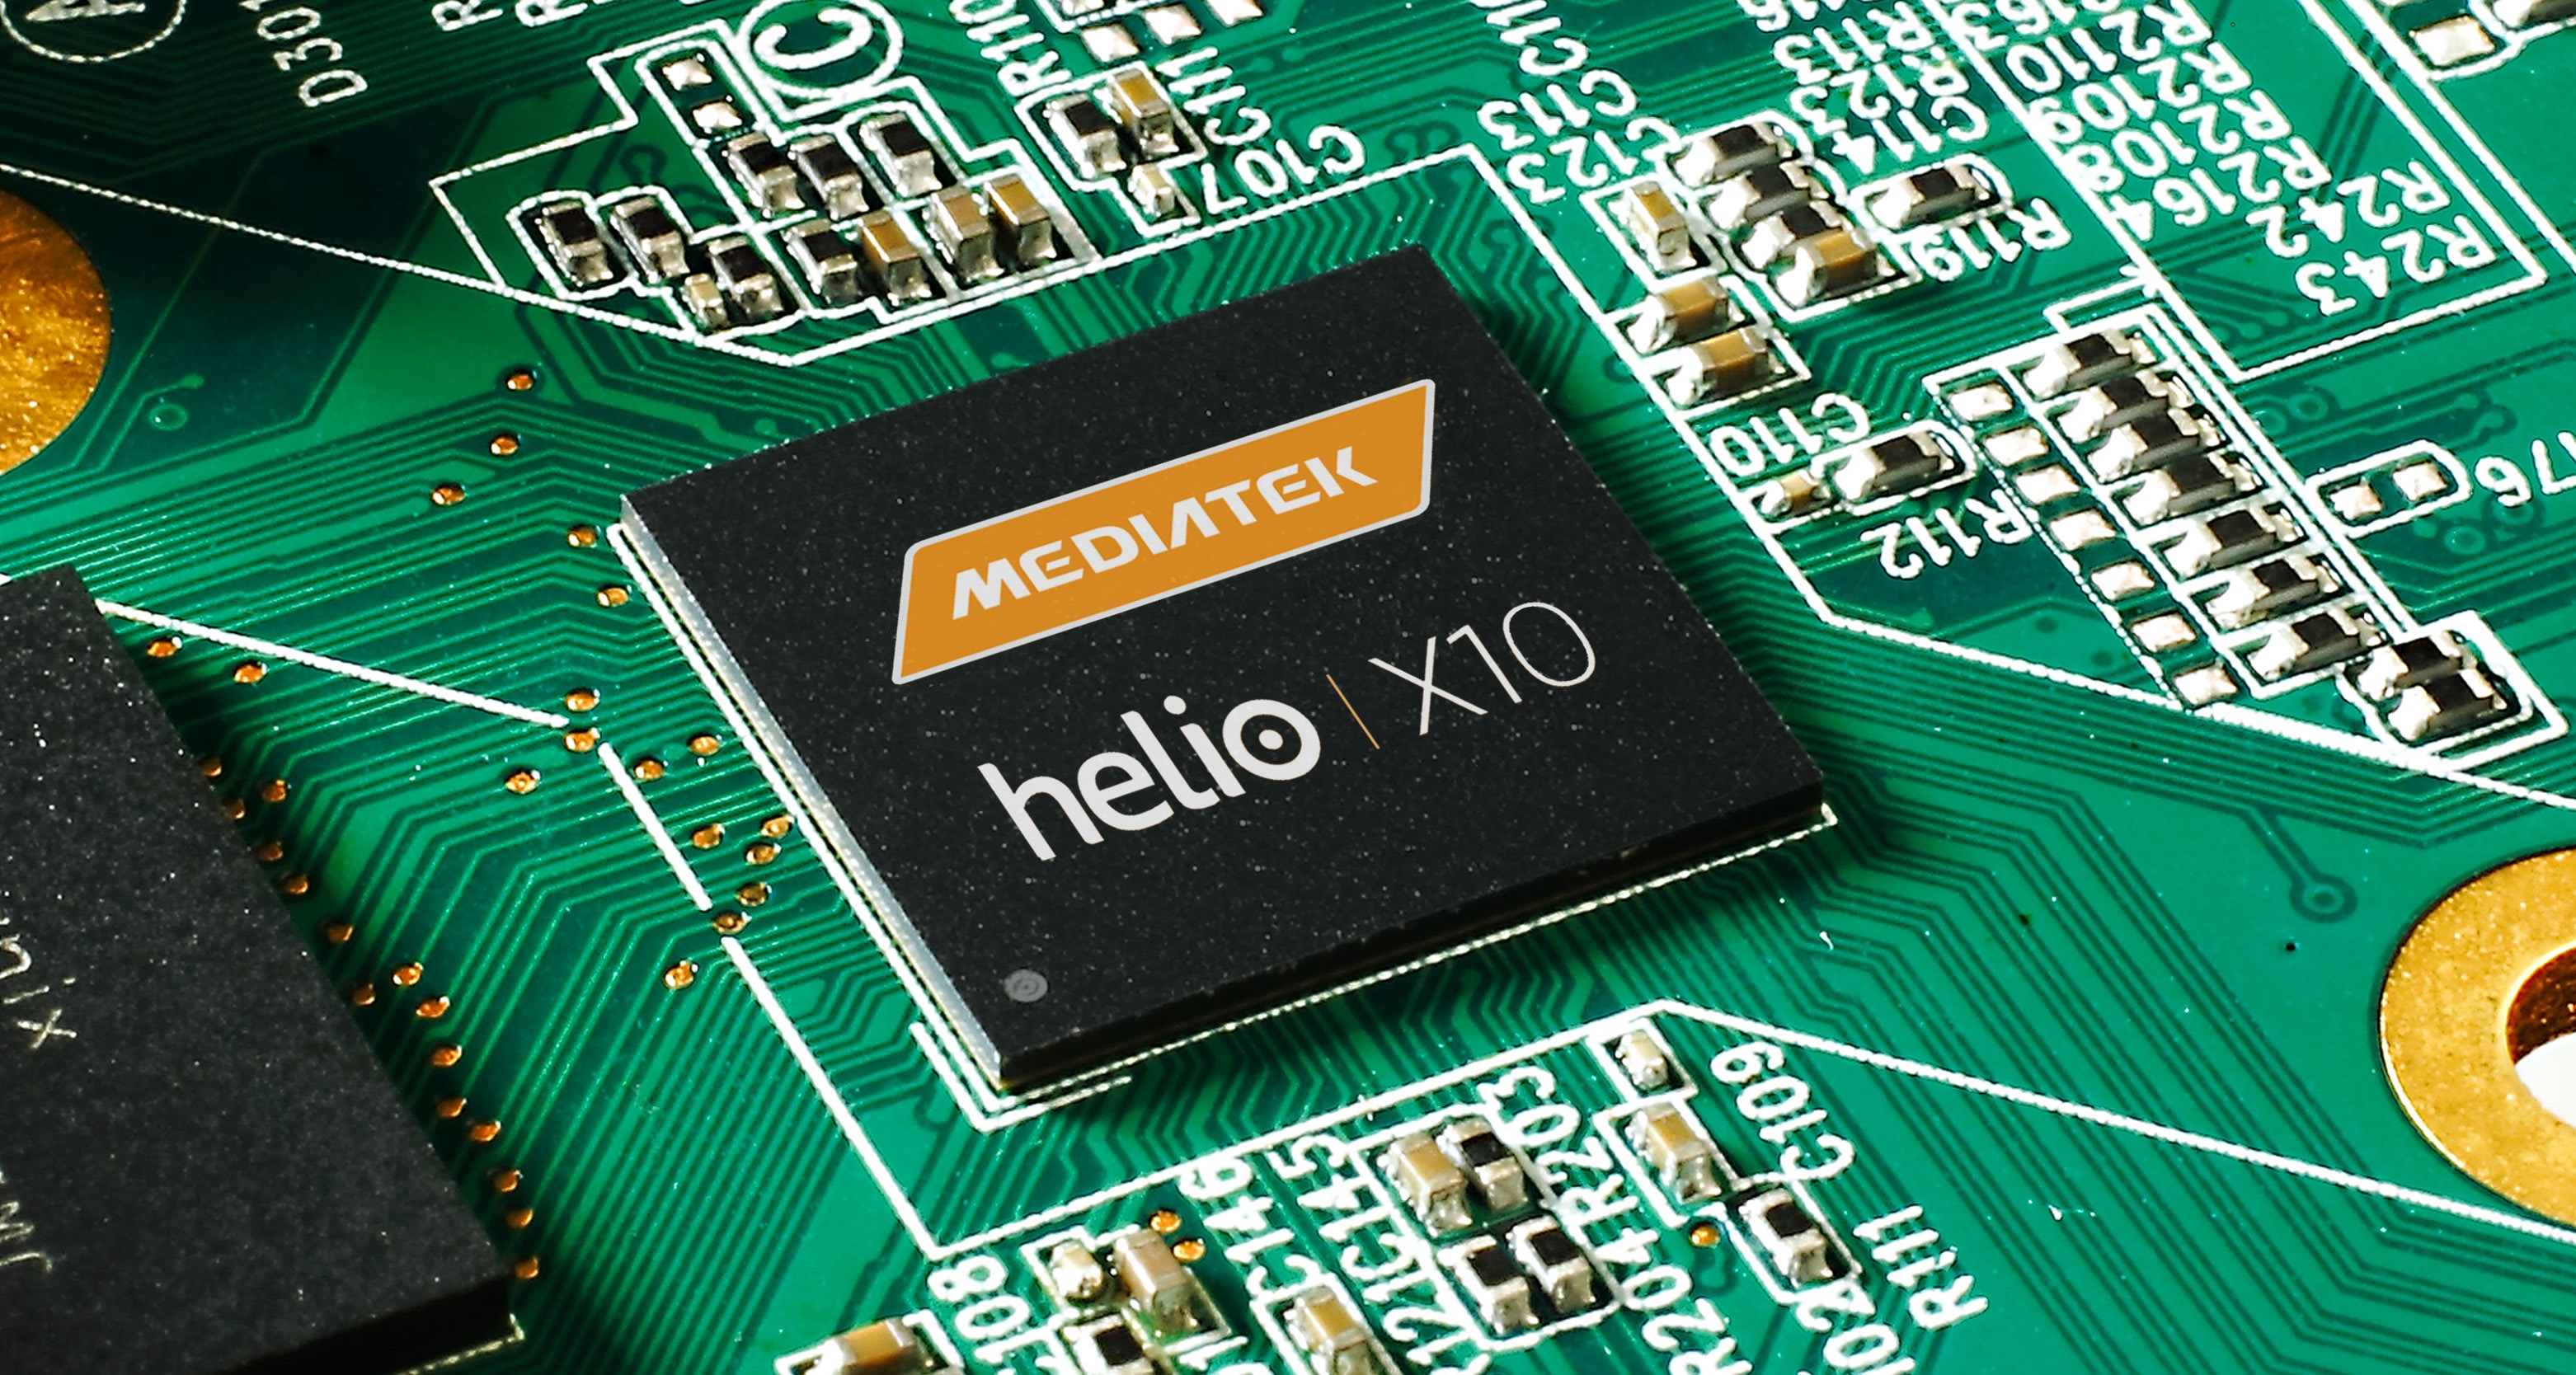 MediaTek Helio X10 chip